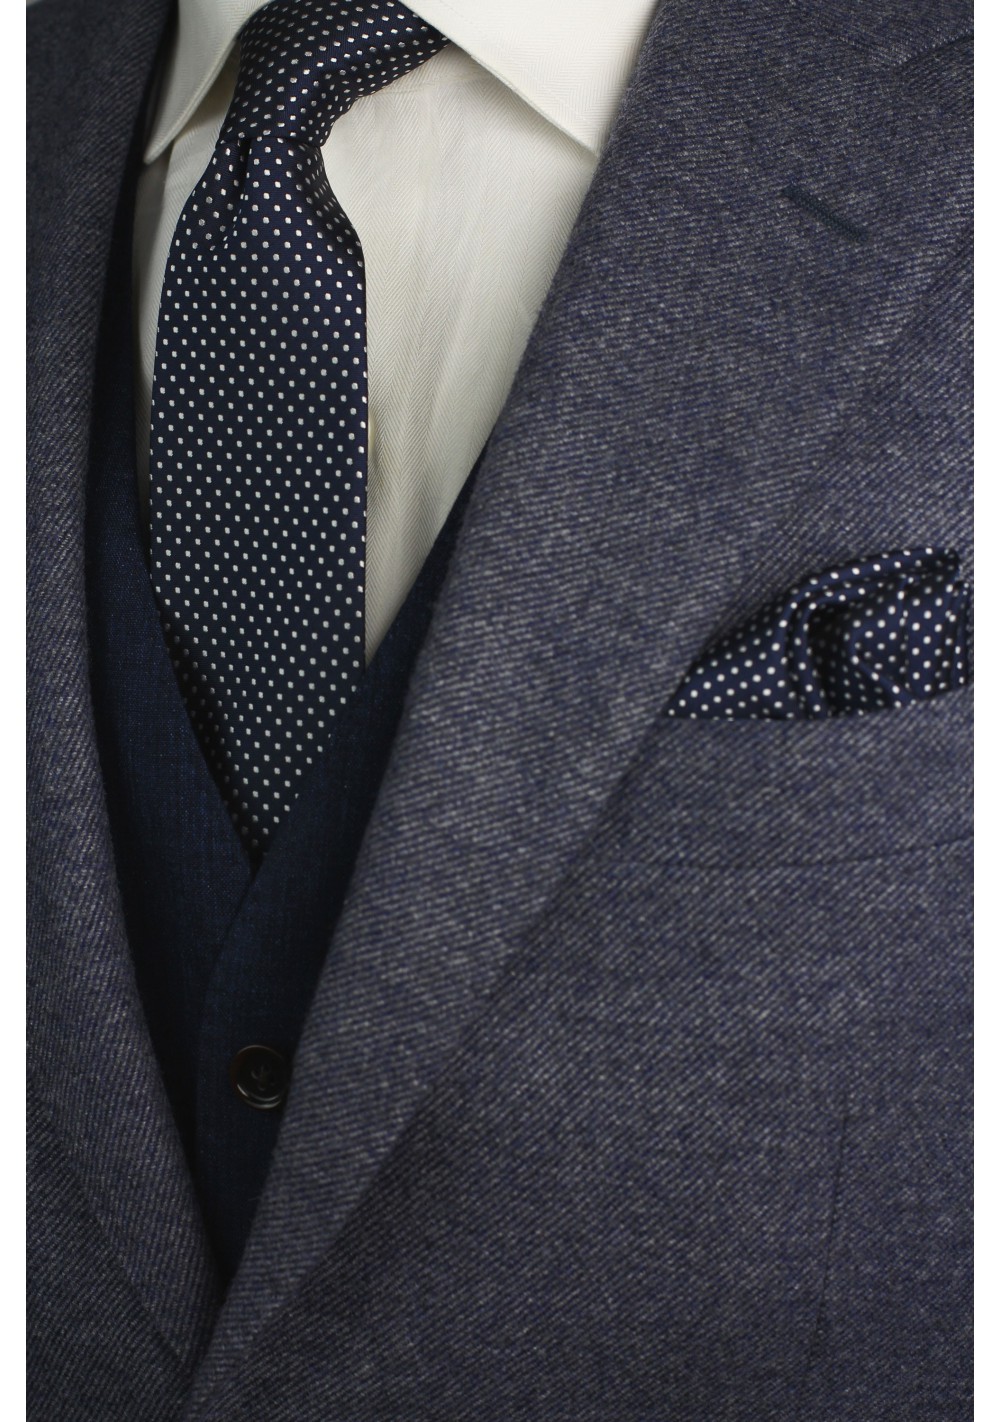 Narrow Pin Dot Tie in Midnight Blue | Bows-N-Ties.com